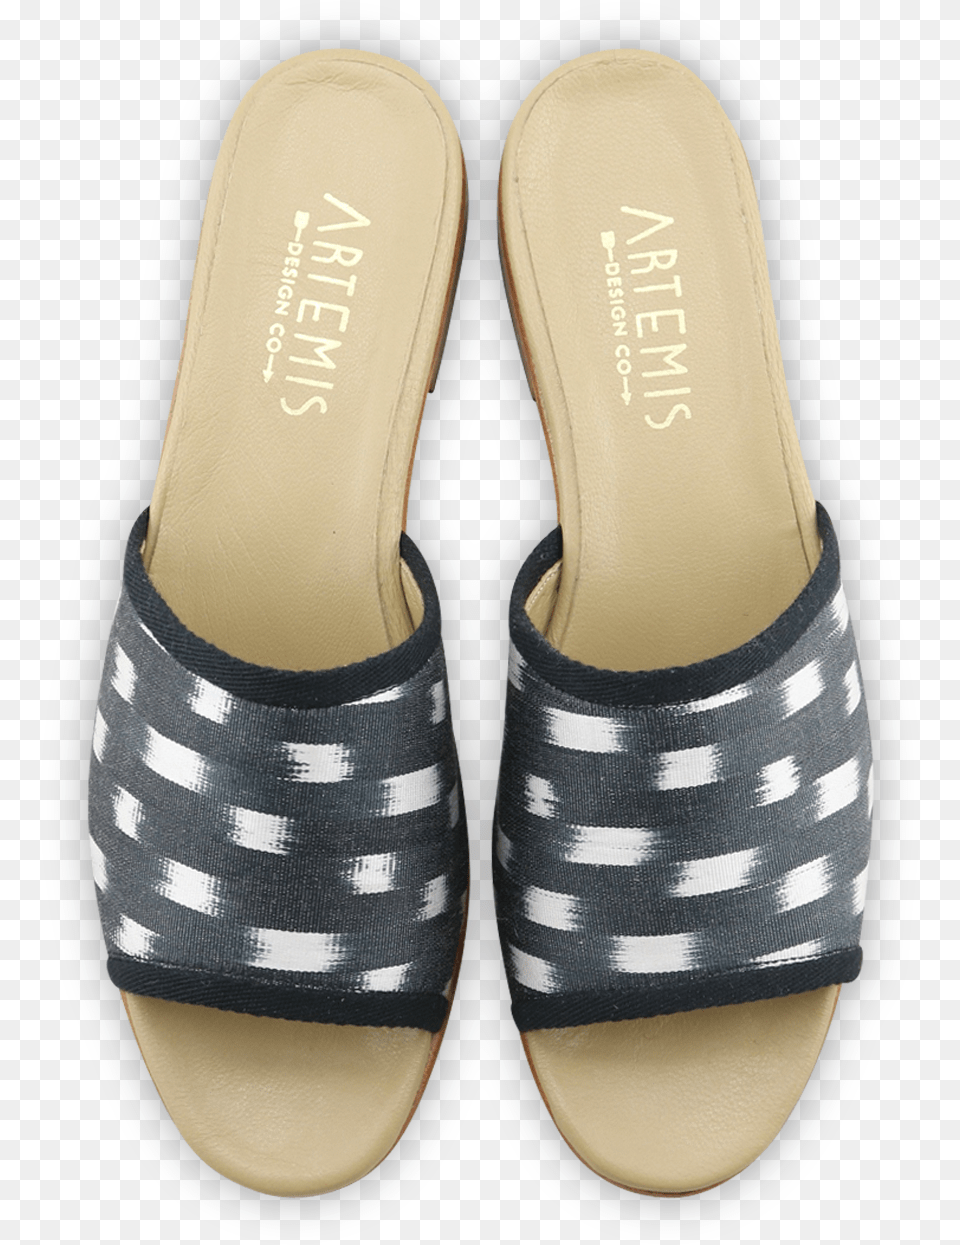 Zebra Print, Clothing, Footwear, Sandal, Shoe Png Image